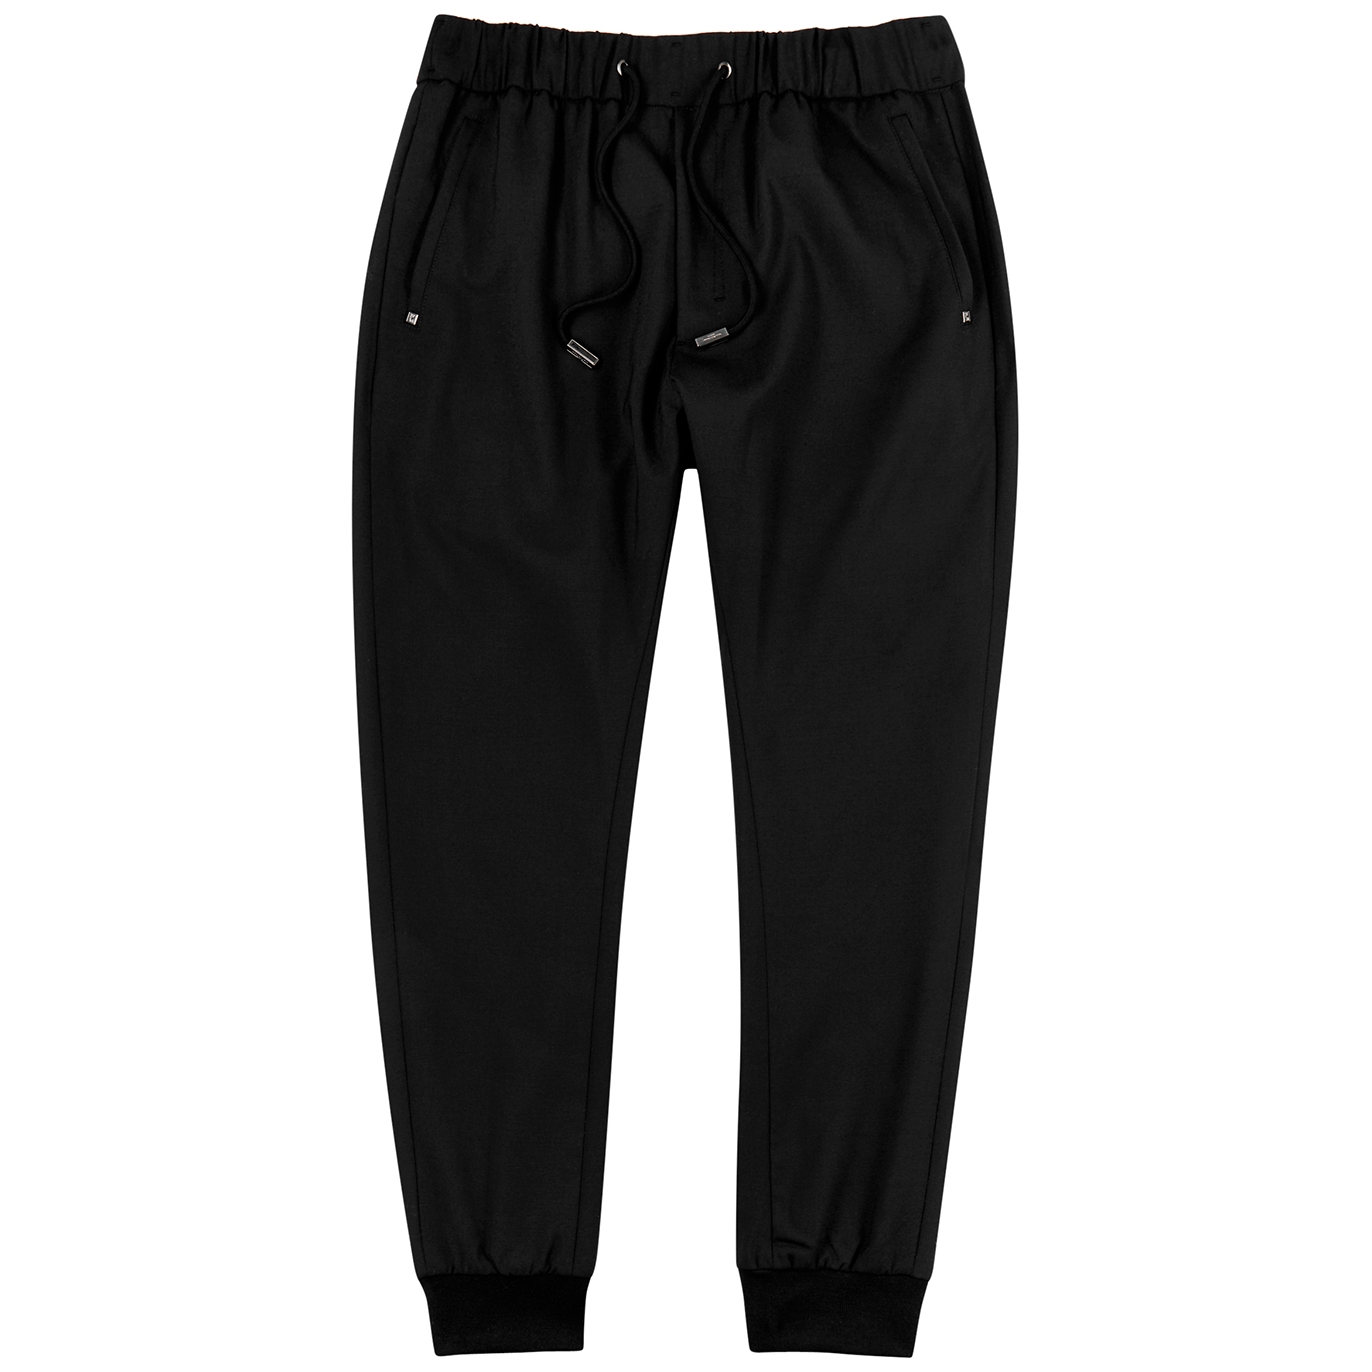 Wooyoungmi Woven Sweatpants - Black - 52